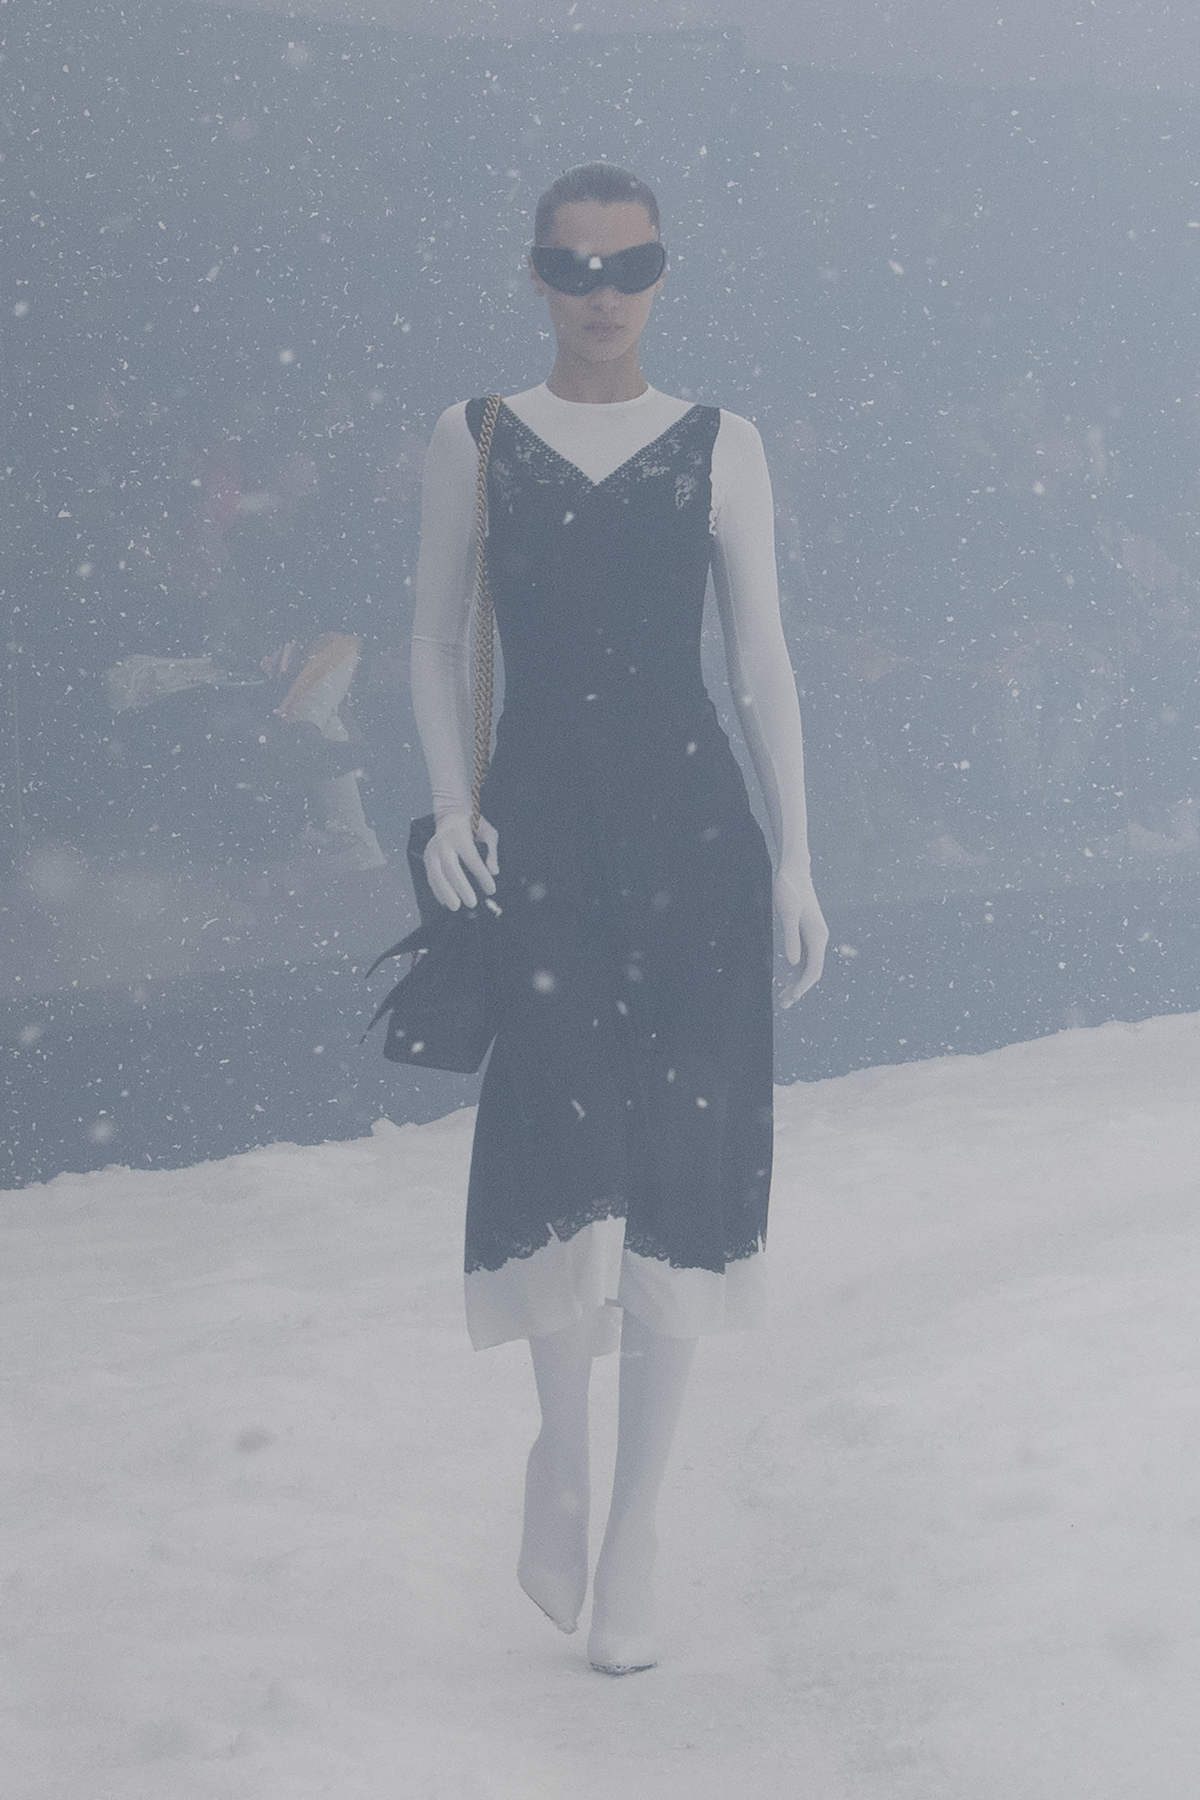 Review: Balenciaga's Winter 22 Collection Confronts Ambiguity